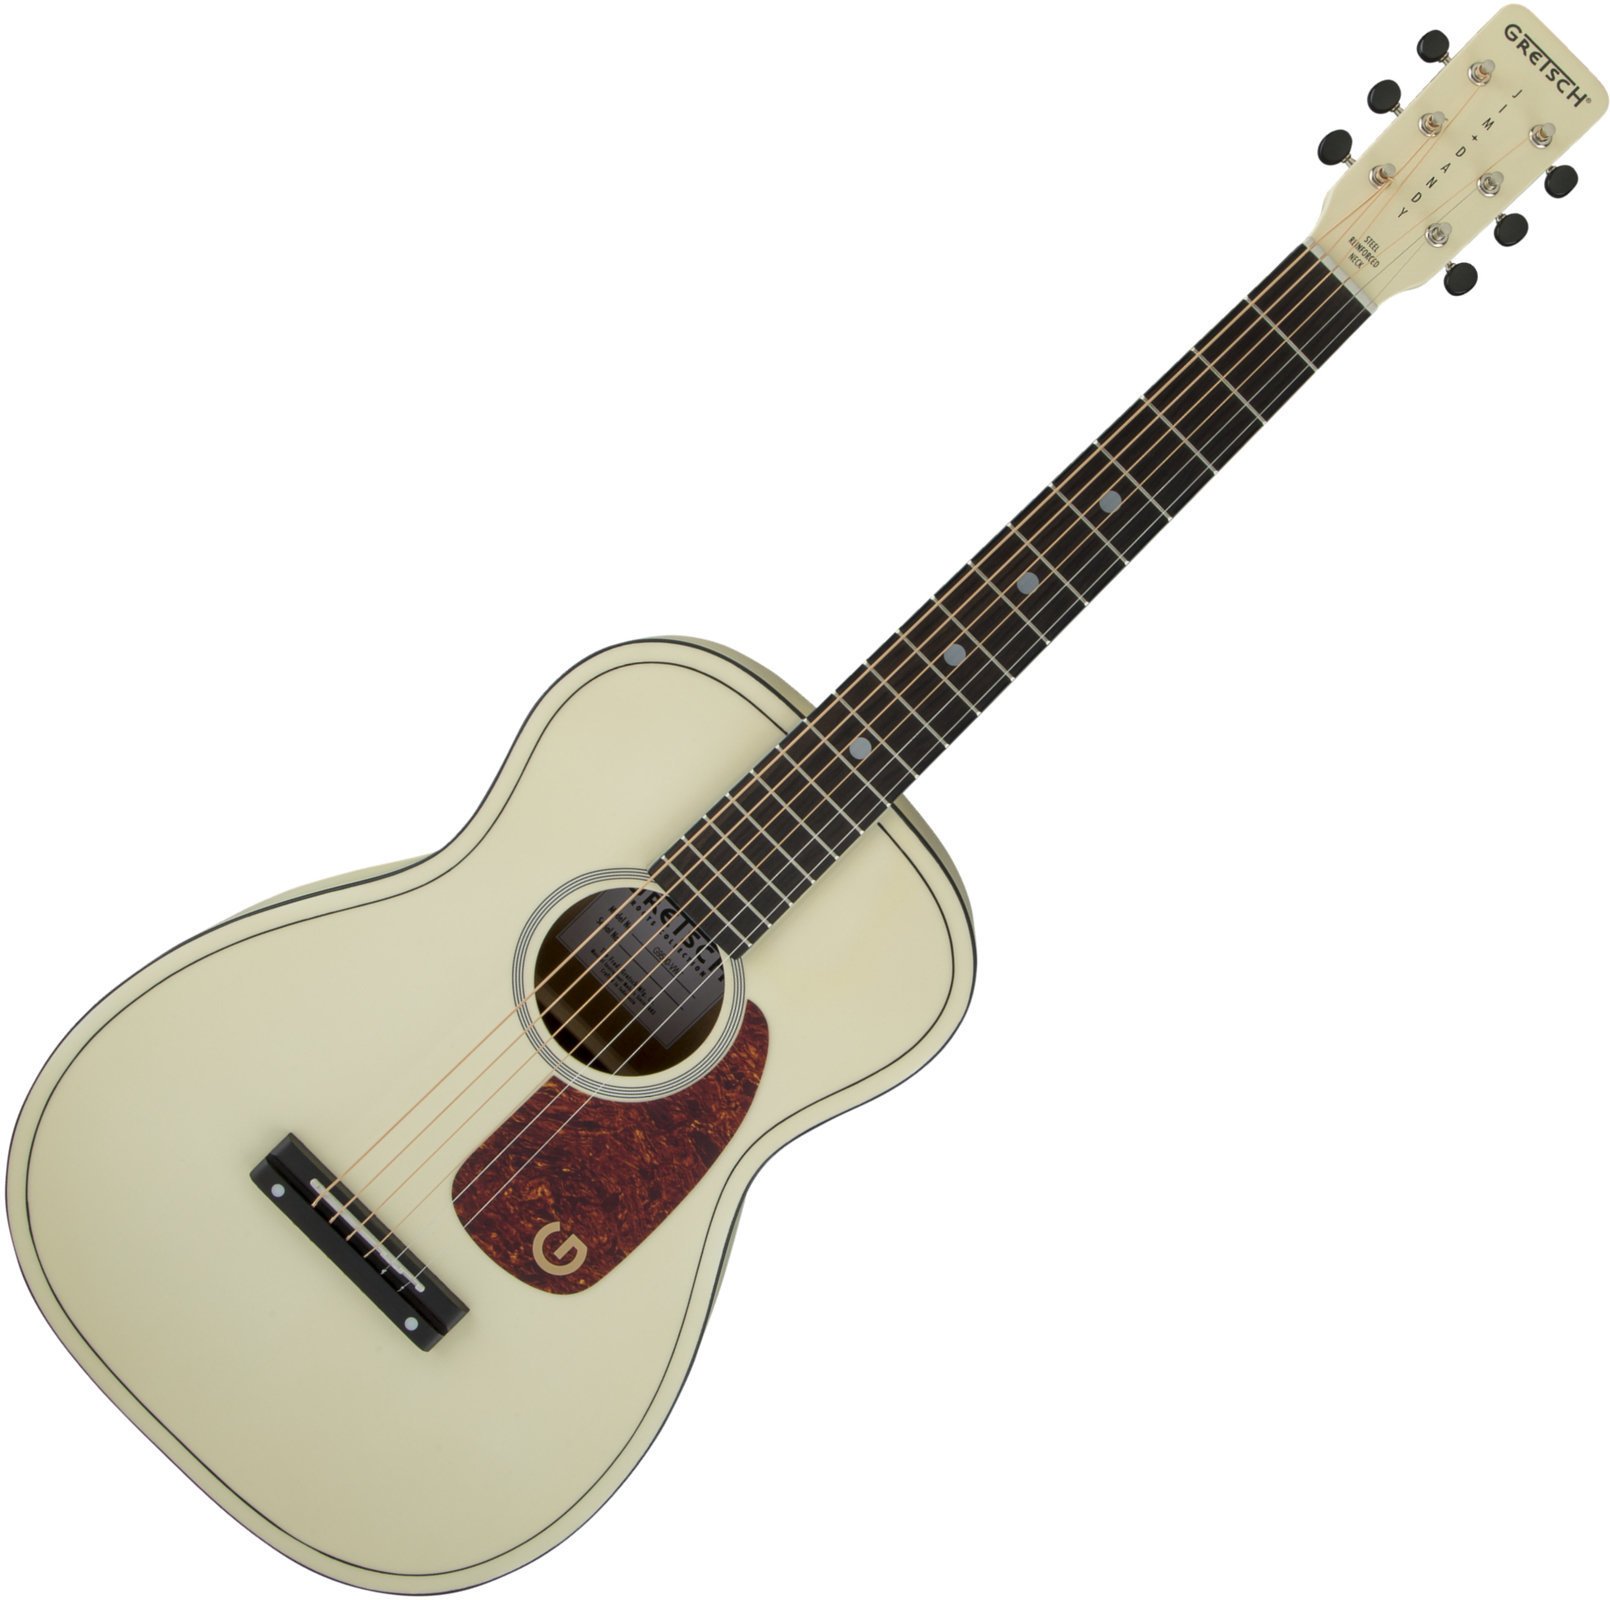 Folk-guitar Gretsch G9500 Jim Dandy Limited Edition Vintage White